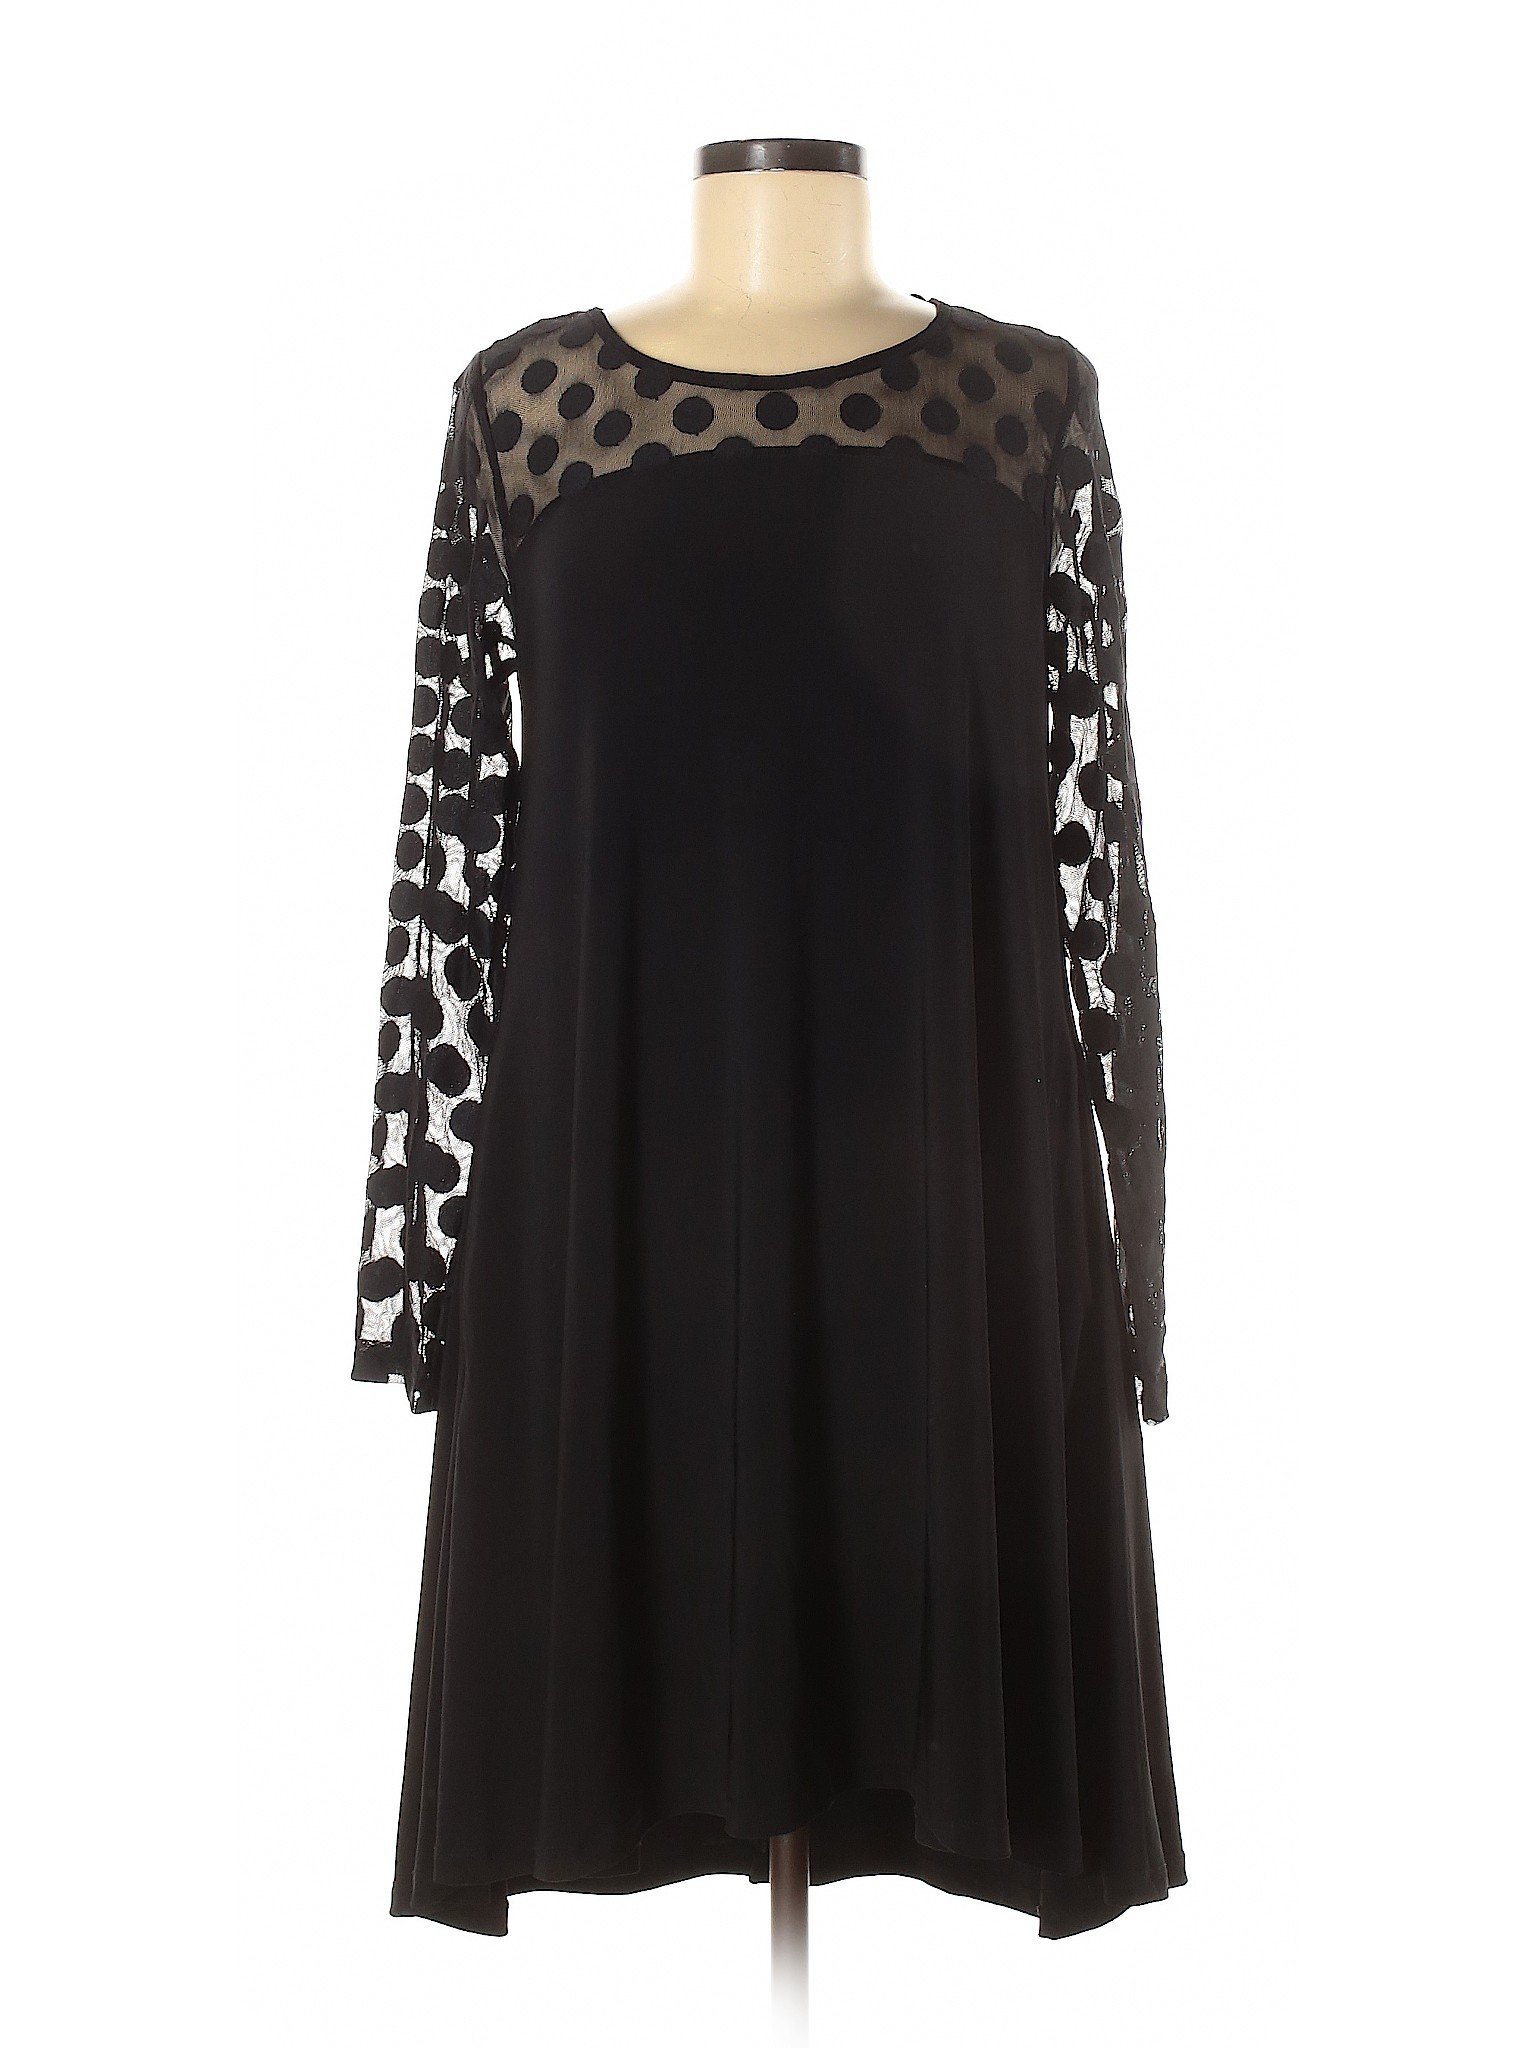 Nina Leonard Women Black Cocktail Dress M | eBay